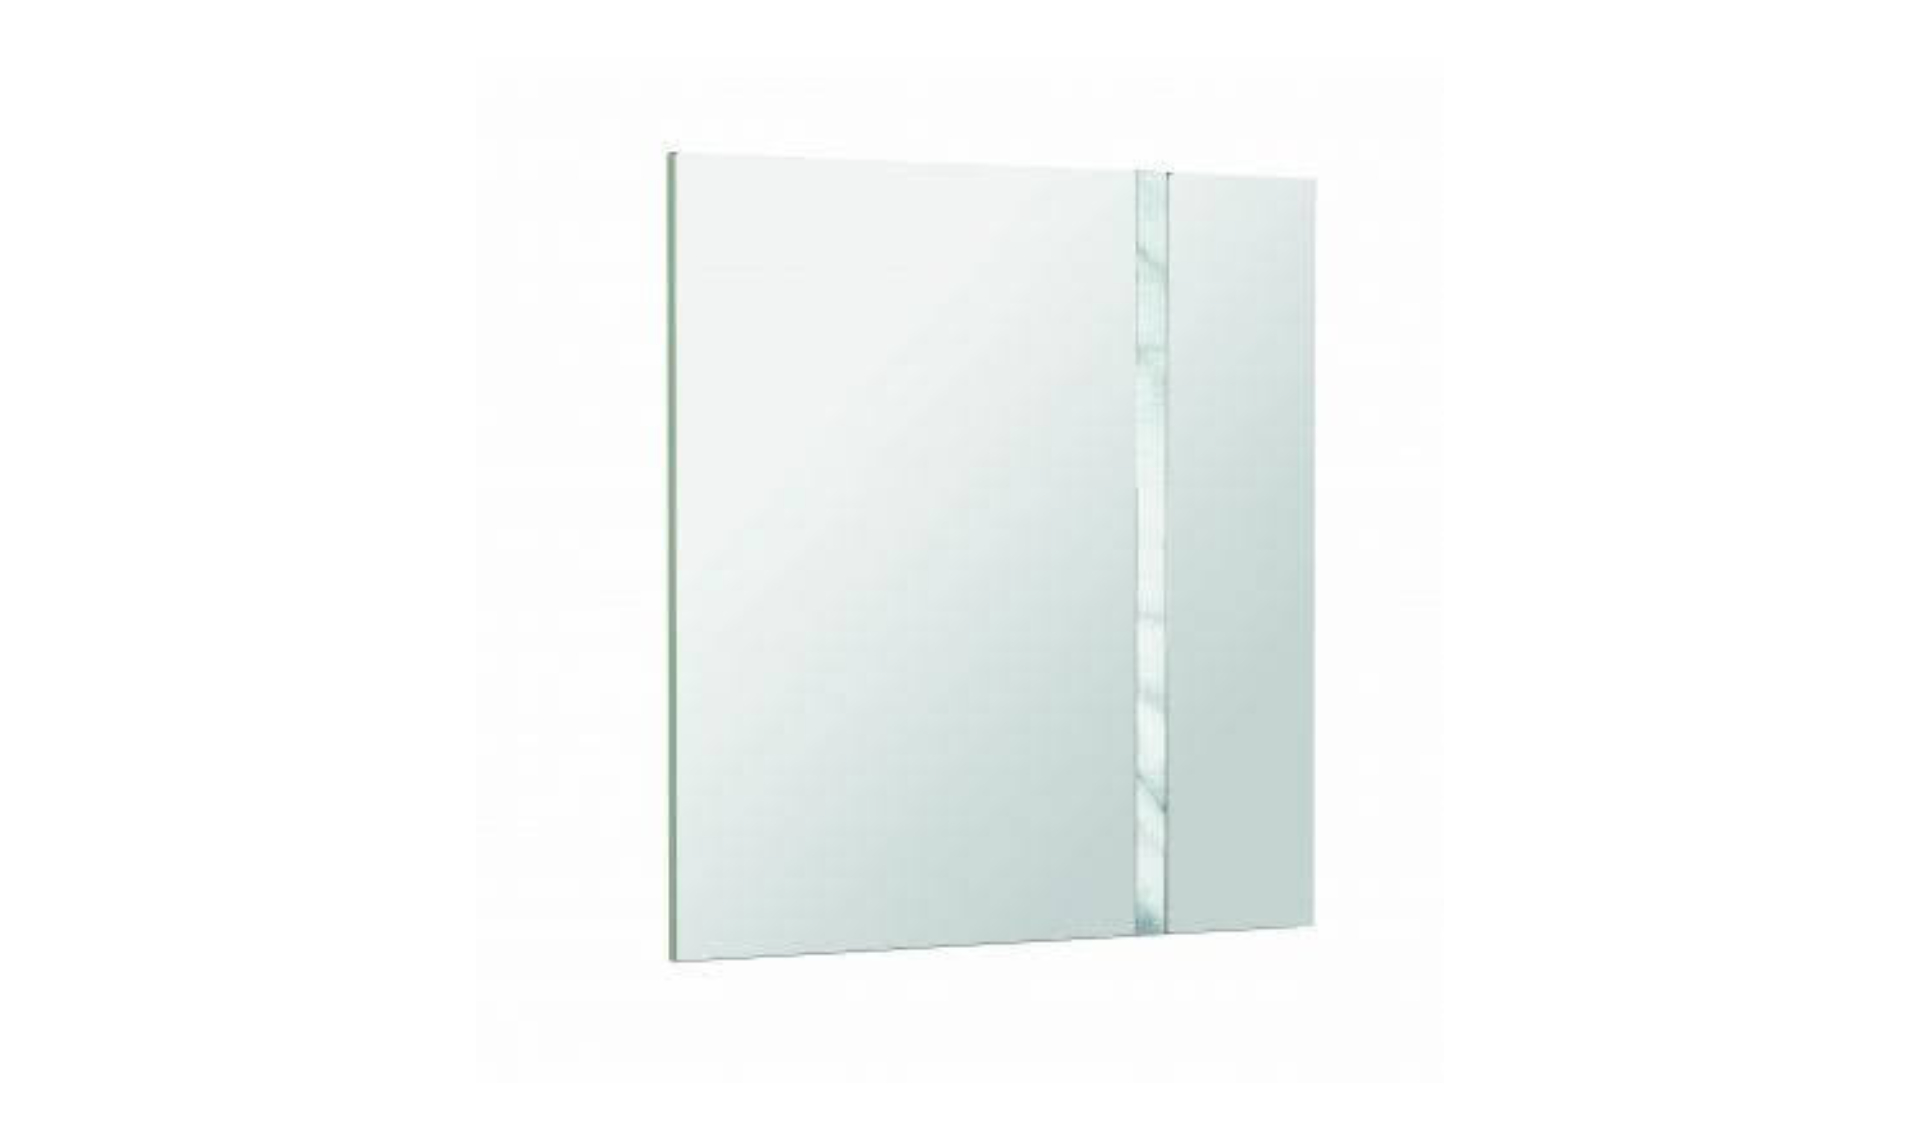 bianca italian bedroom set–white gloss mirror